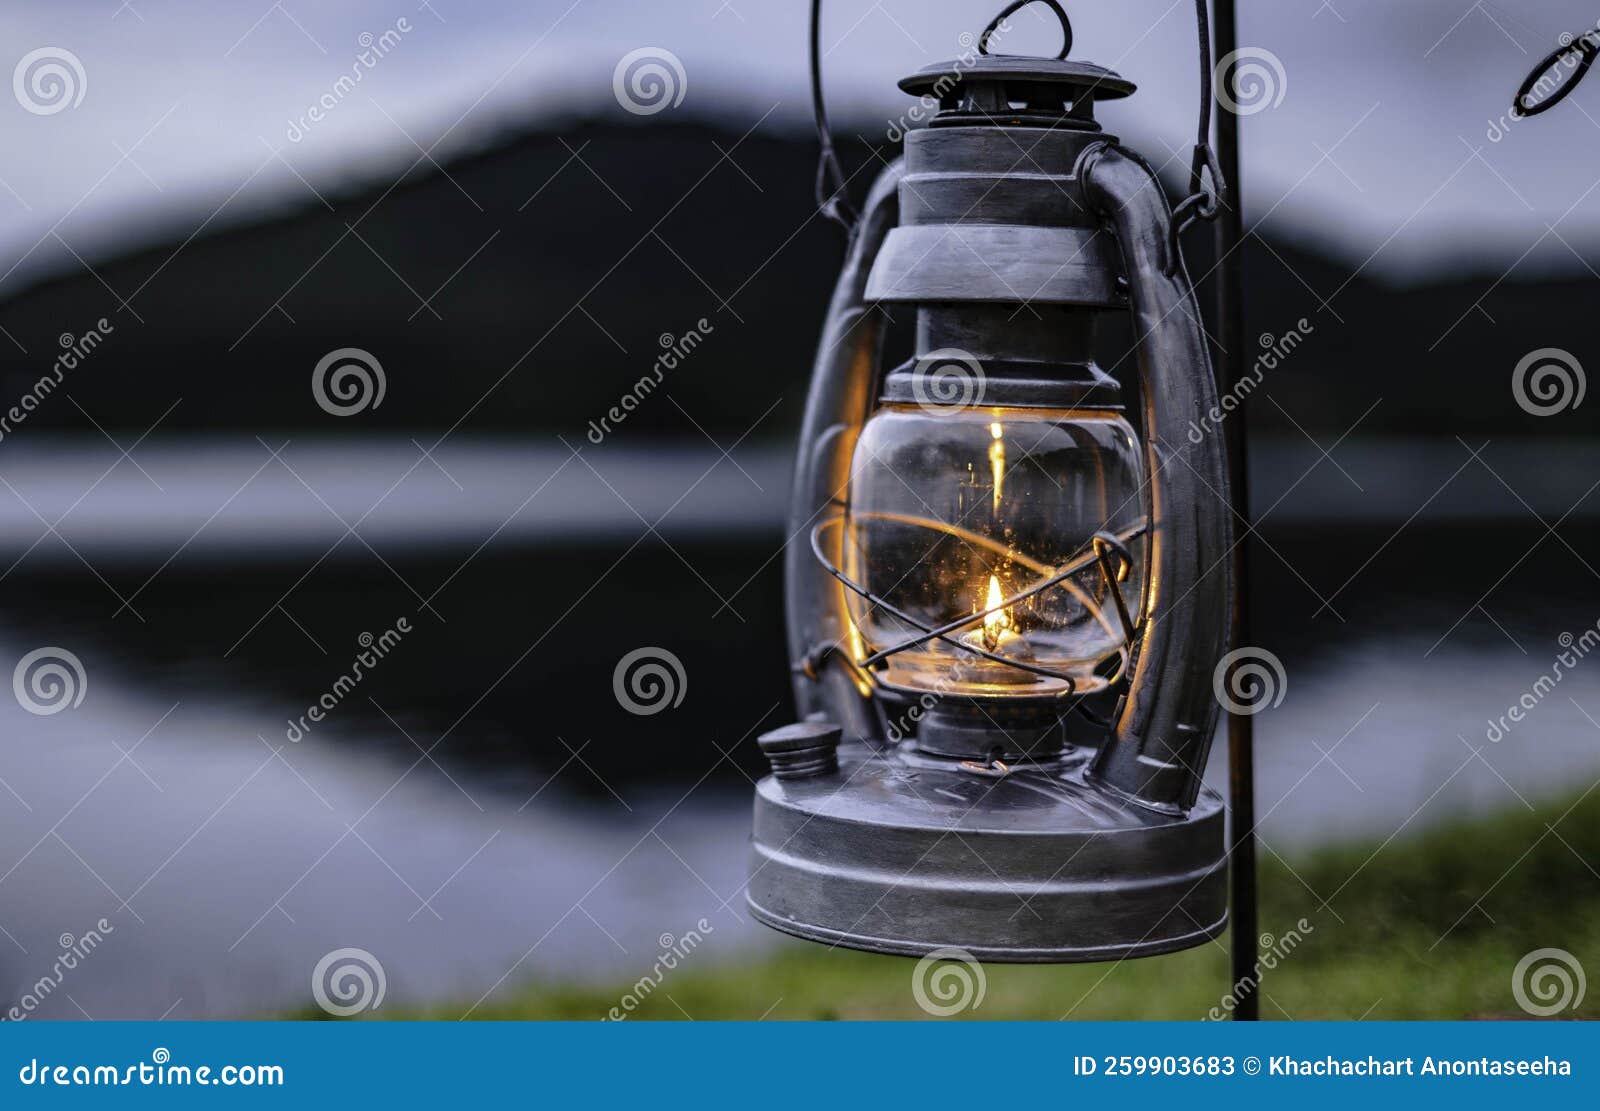 https://thumbs.dreamstime.com/z/kerosene-lamps-lit-next-to-fishing-rods-to-light-up-night-khao-chuk-dam-kerosene-lamps-lit-next-to-fishing-rods-to-259903683.jpg